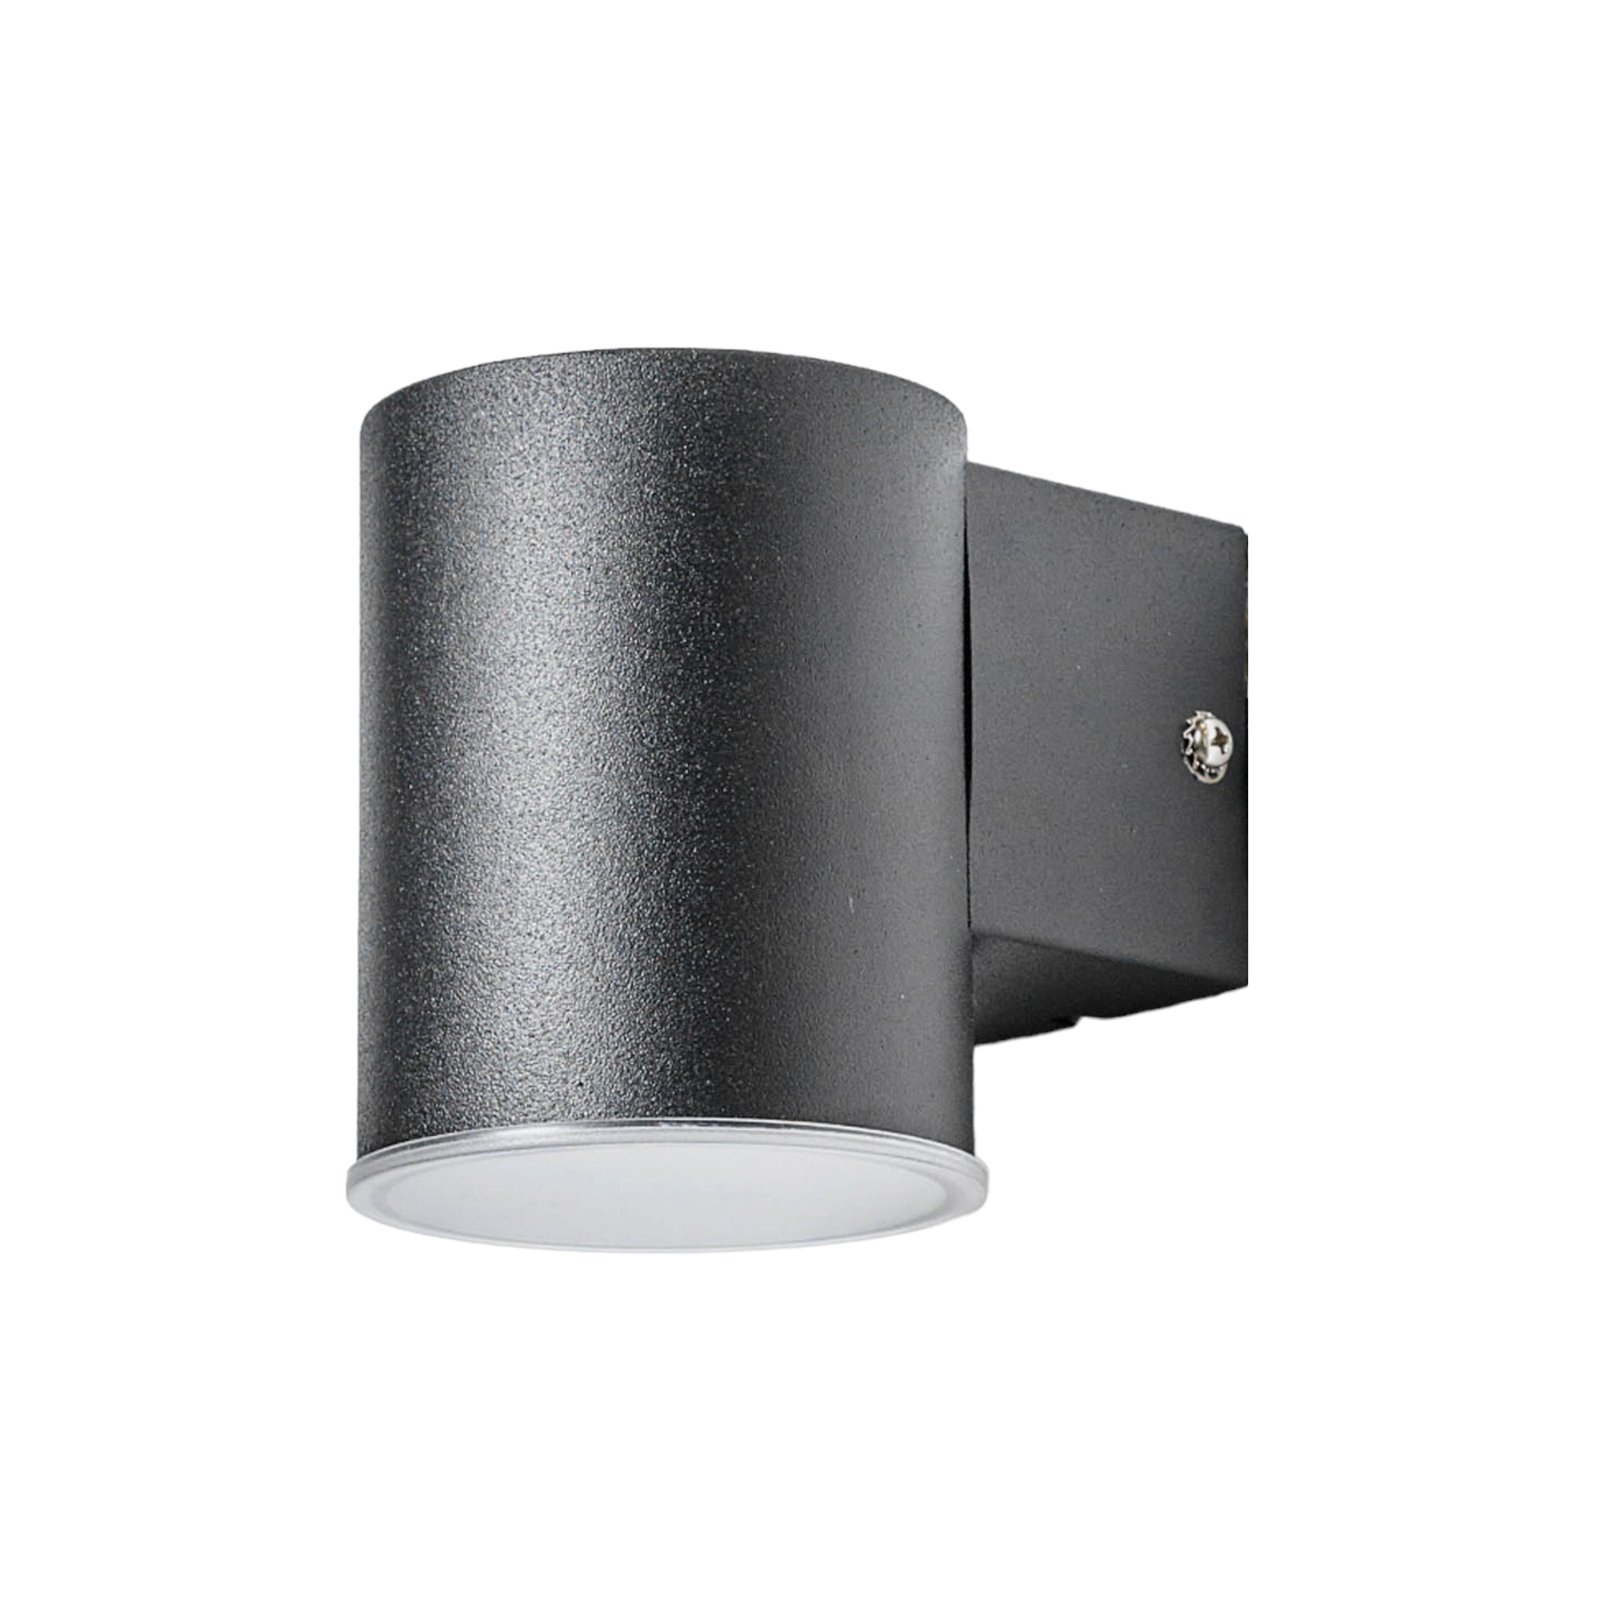 Sleek Morena LED outdoor wall lamp in black